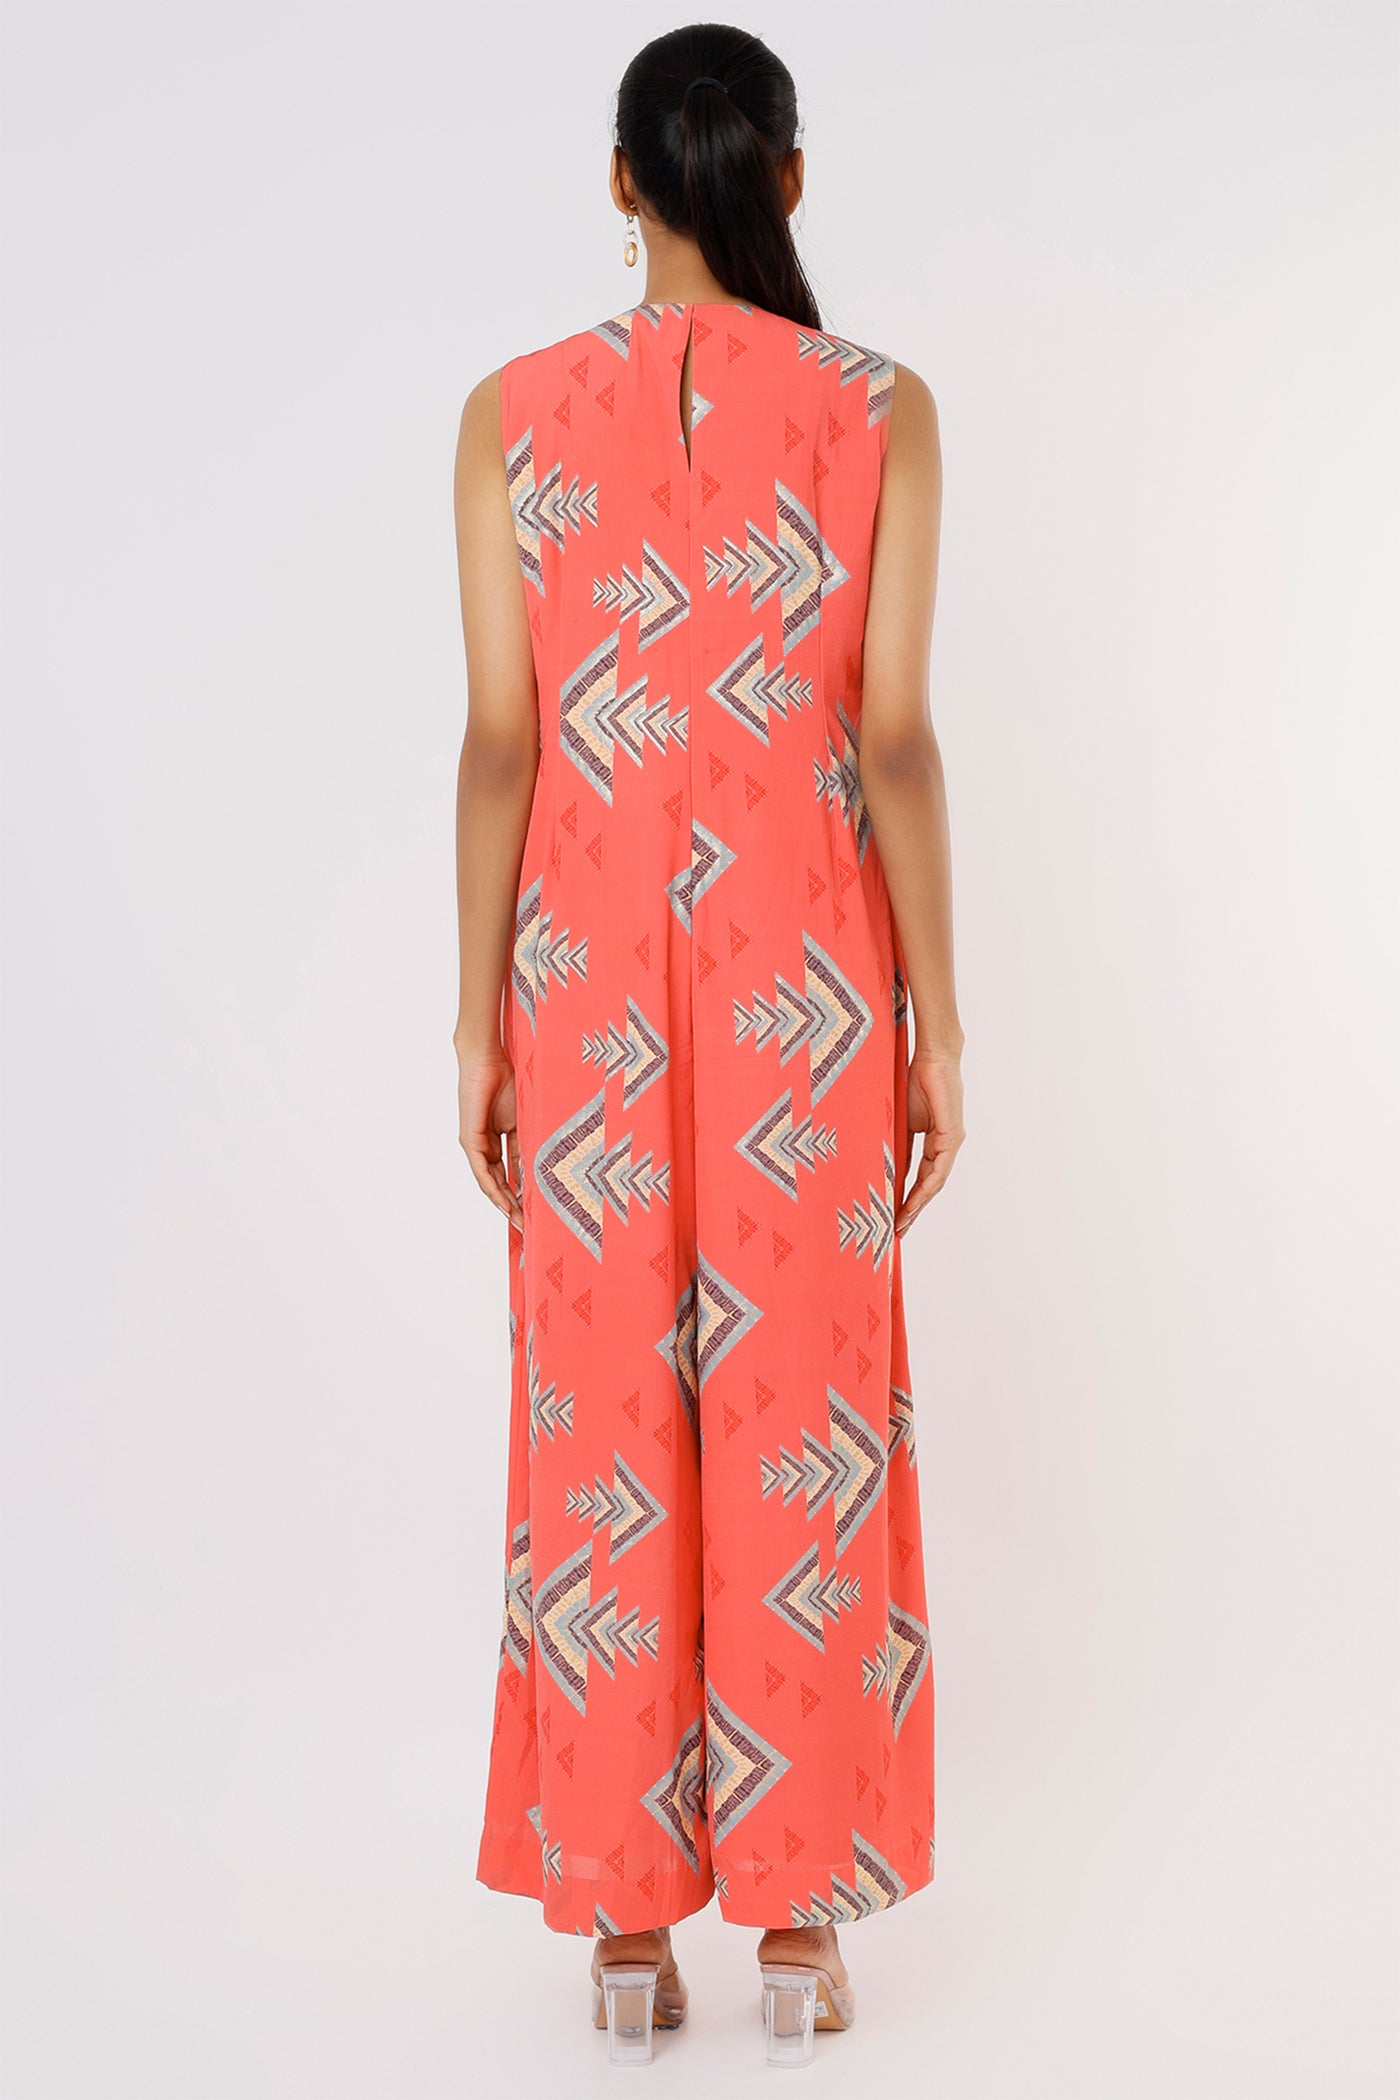 Gopi vaid Zoe Jumpsuit coral festive Indian designer wear online shopping melange singapore